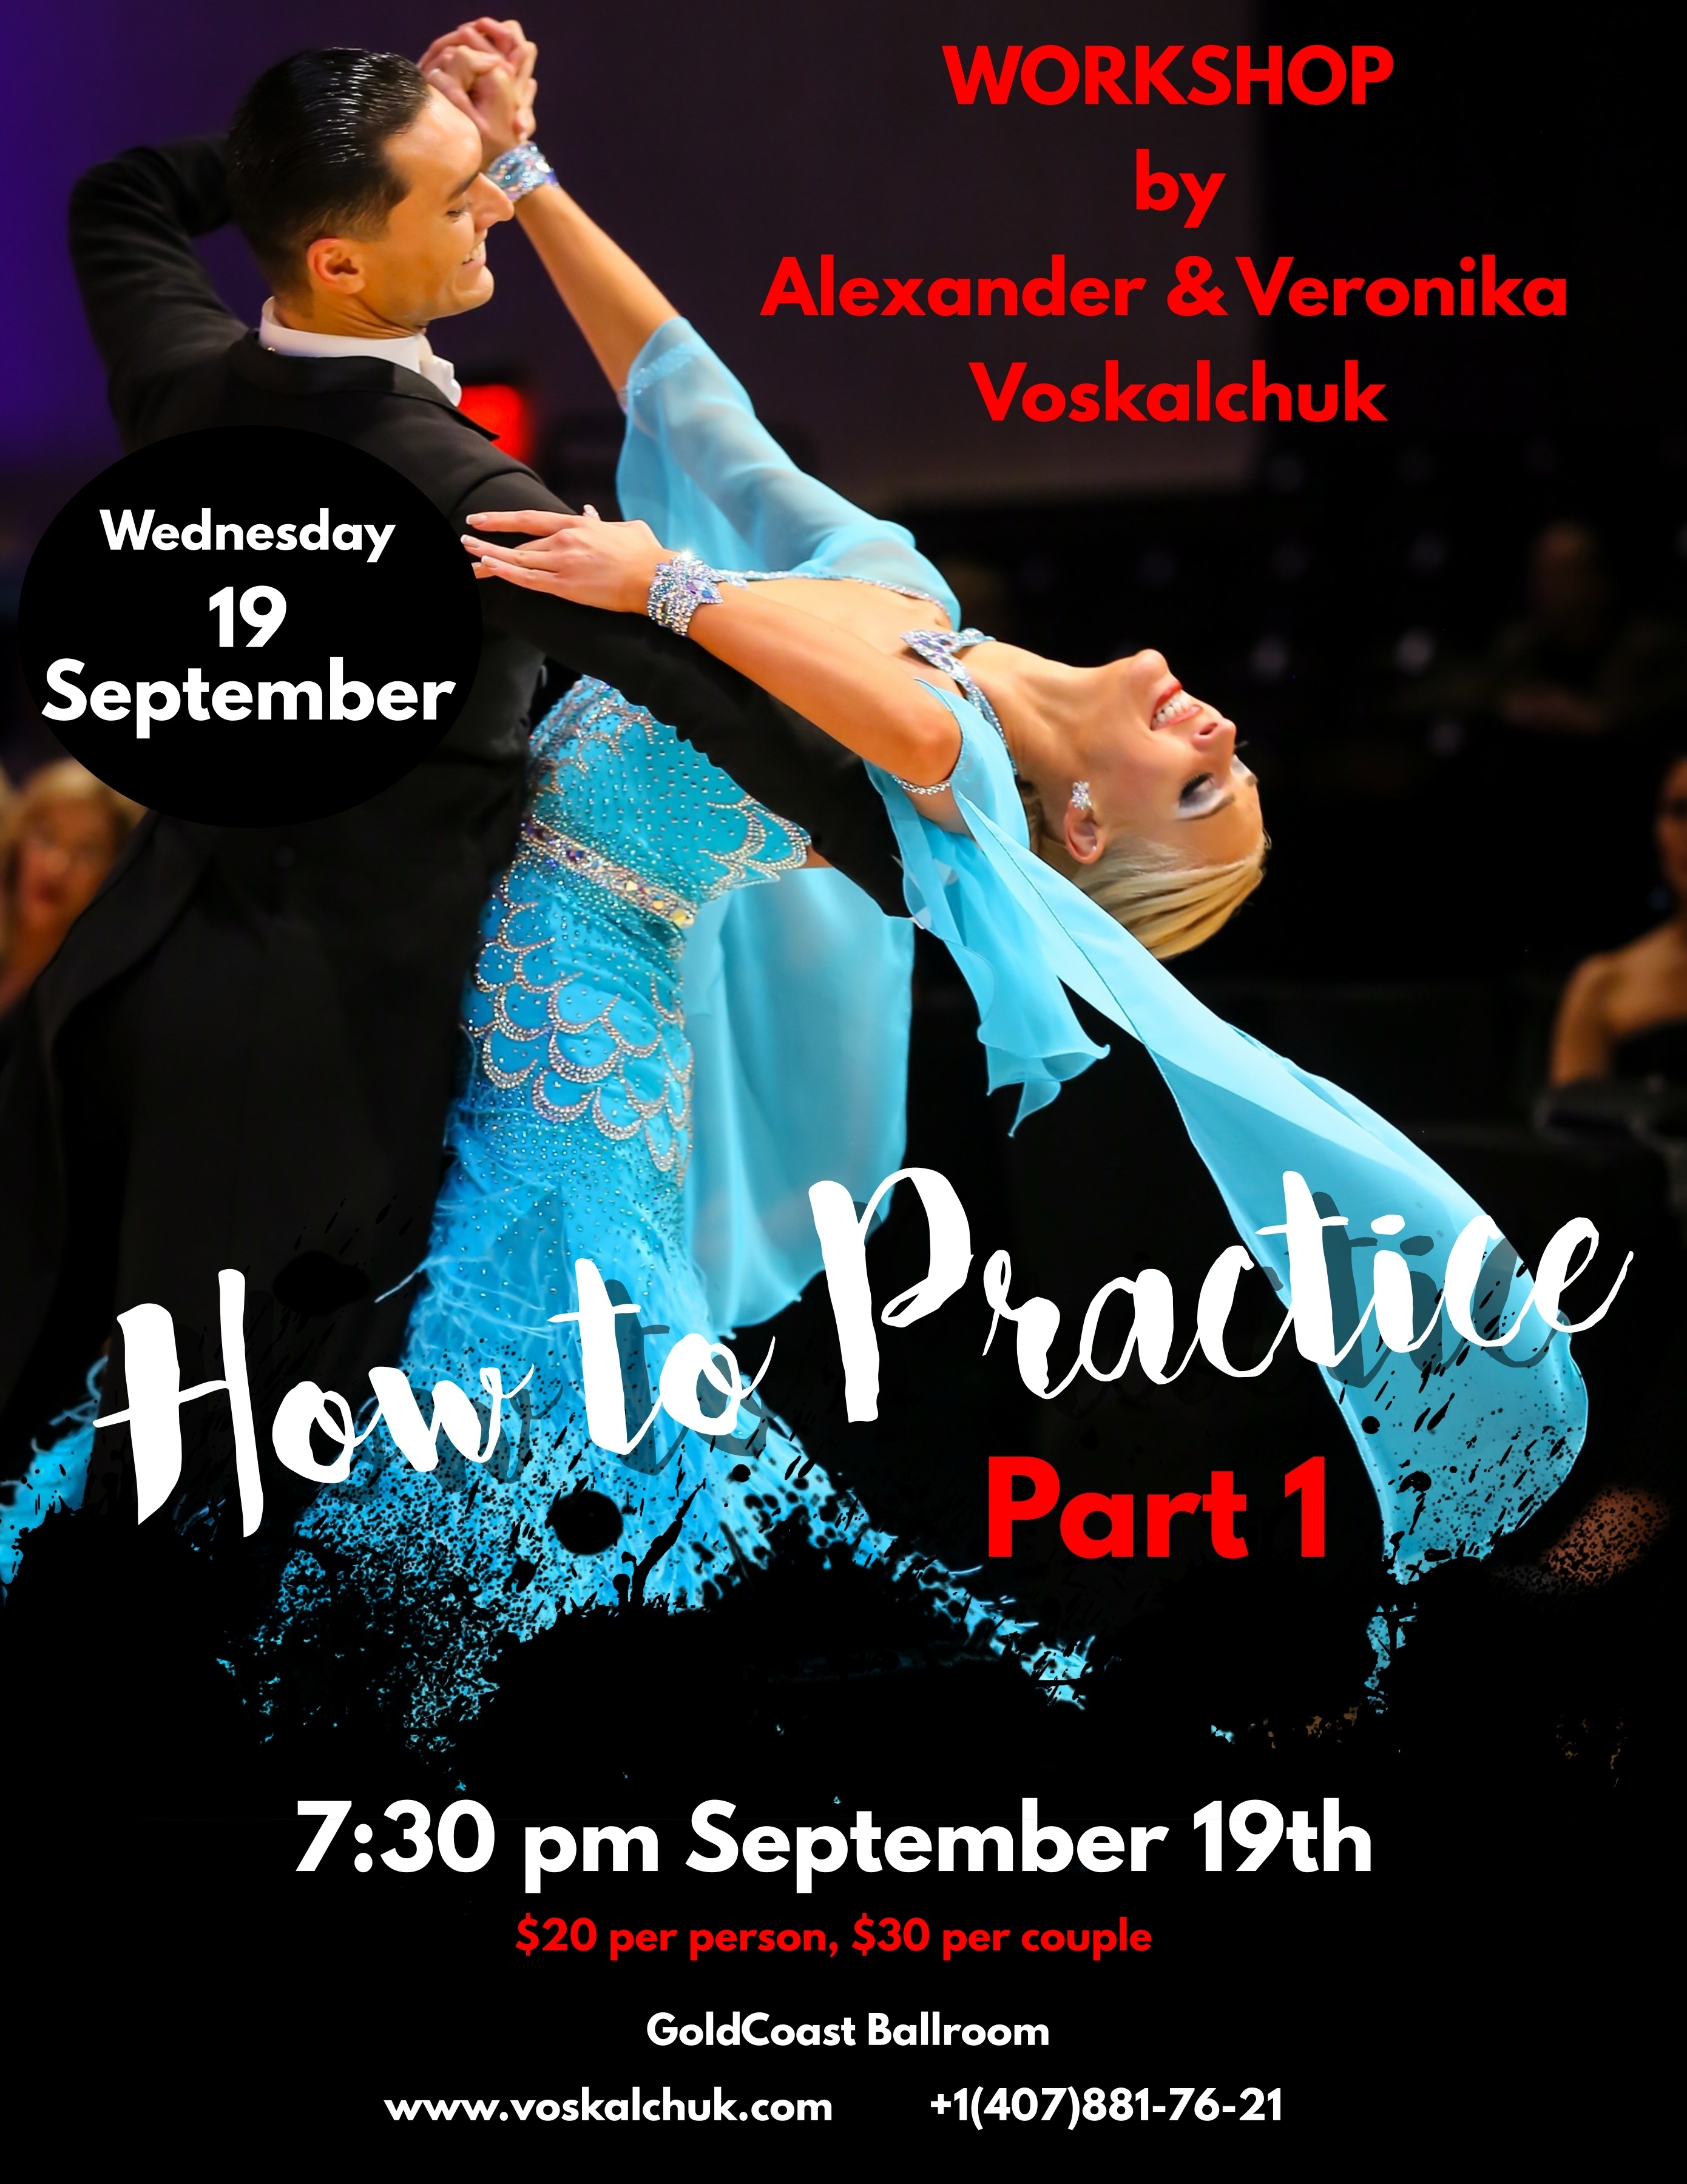 Alexander & Veronika Voskalchuk - September 19, 2018 Workshop - How to Practice (Part 1) - at Goldcoast Ballroom